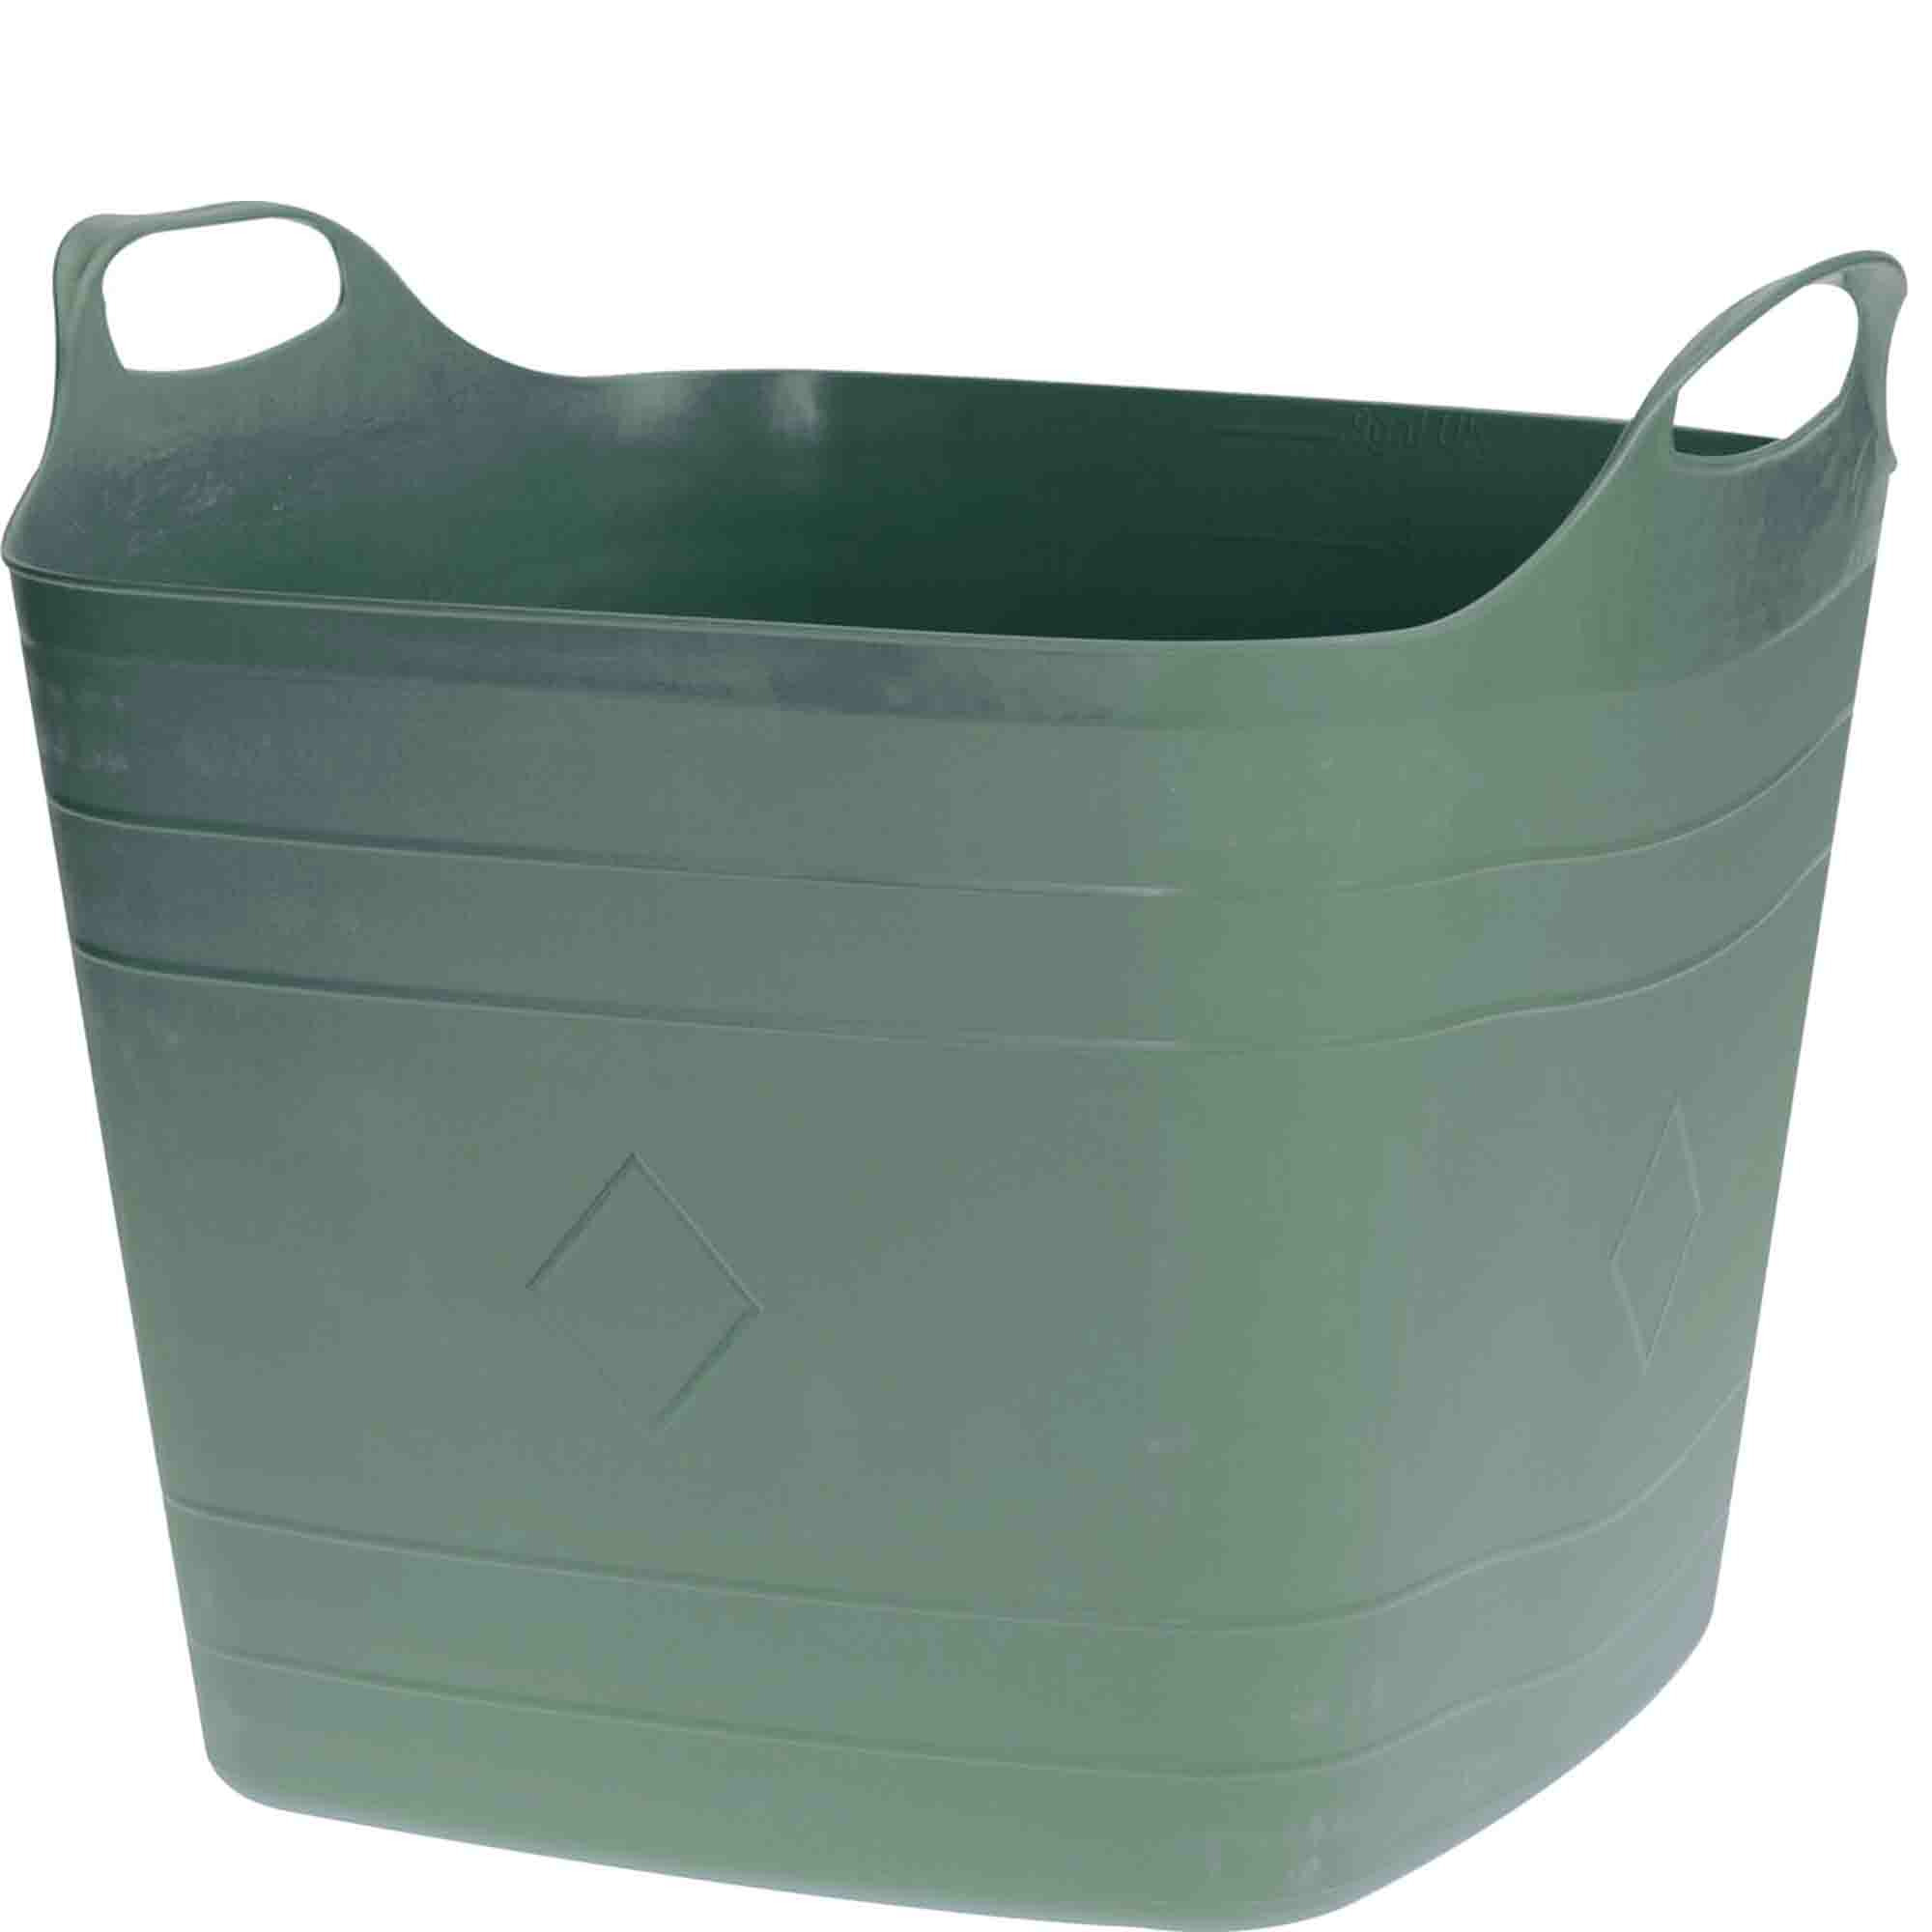 Bathroom Solutions Flexibele kuip emmer/wasmand - groen - liter - vierkant - kunststof -